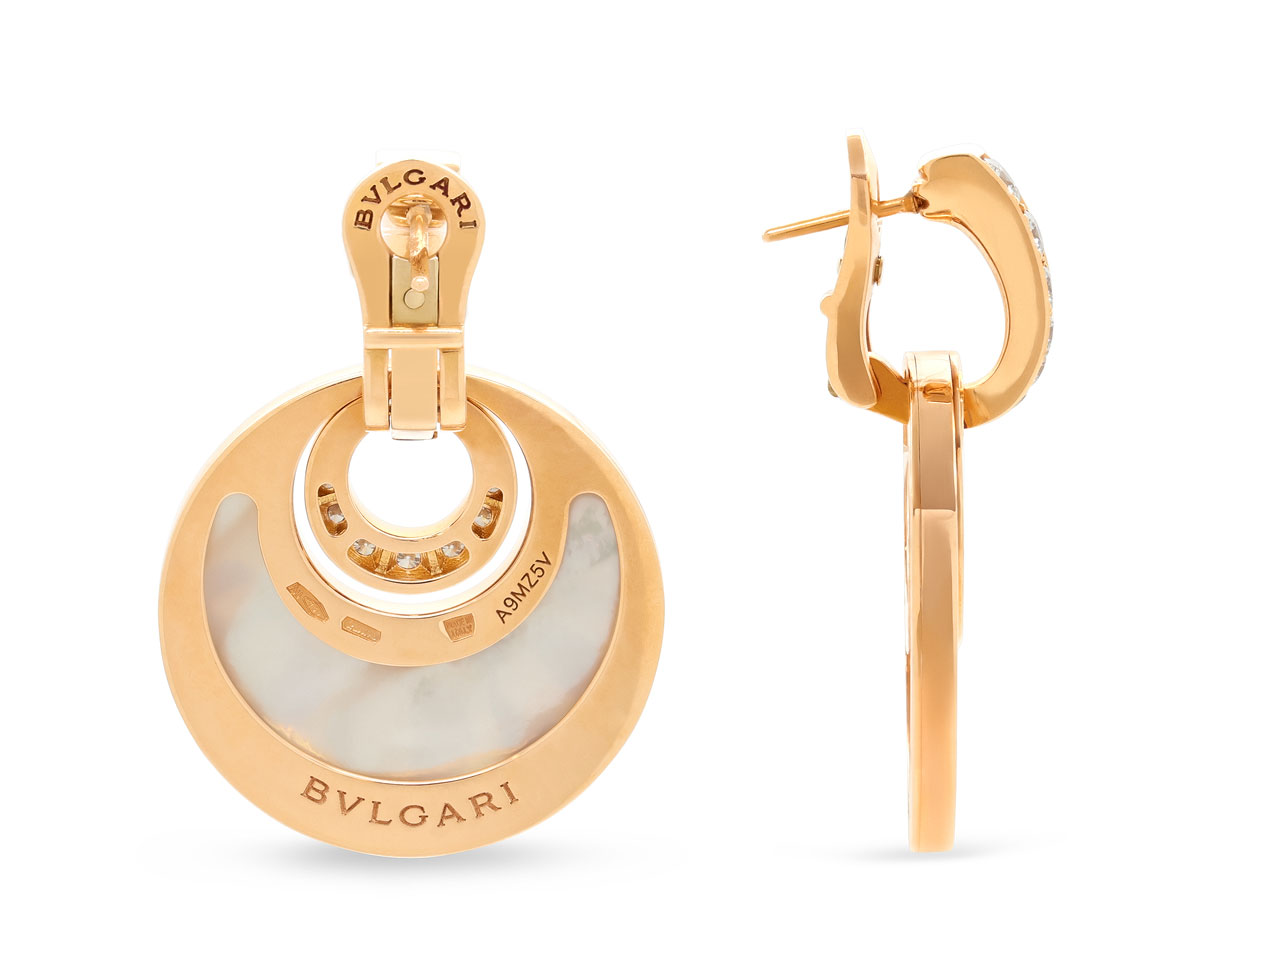 Bulgari 'Intarsio' Diamond and Mother of Pearl Earrings in 18K Rose Gold